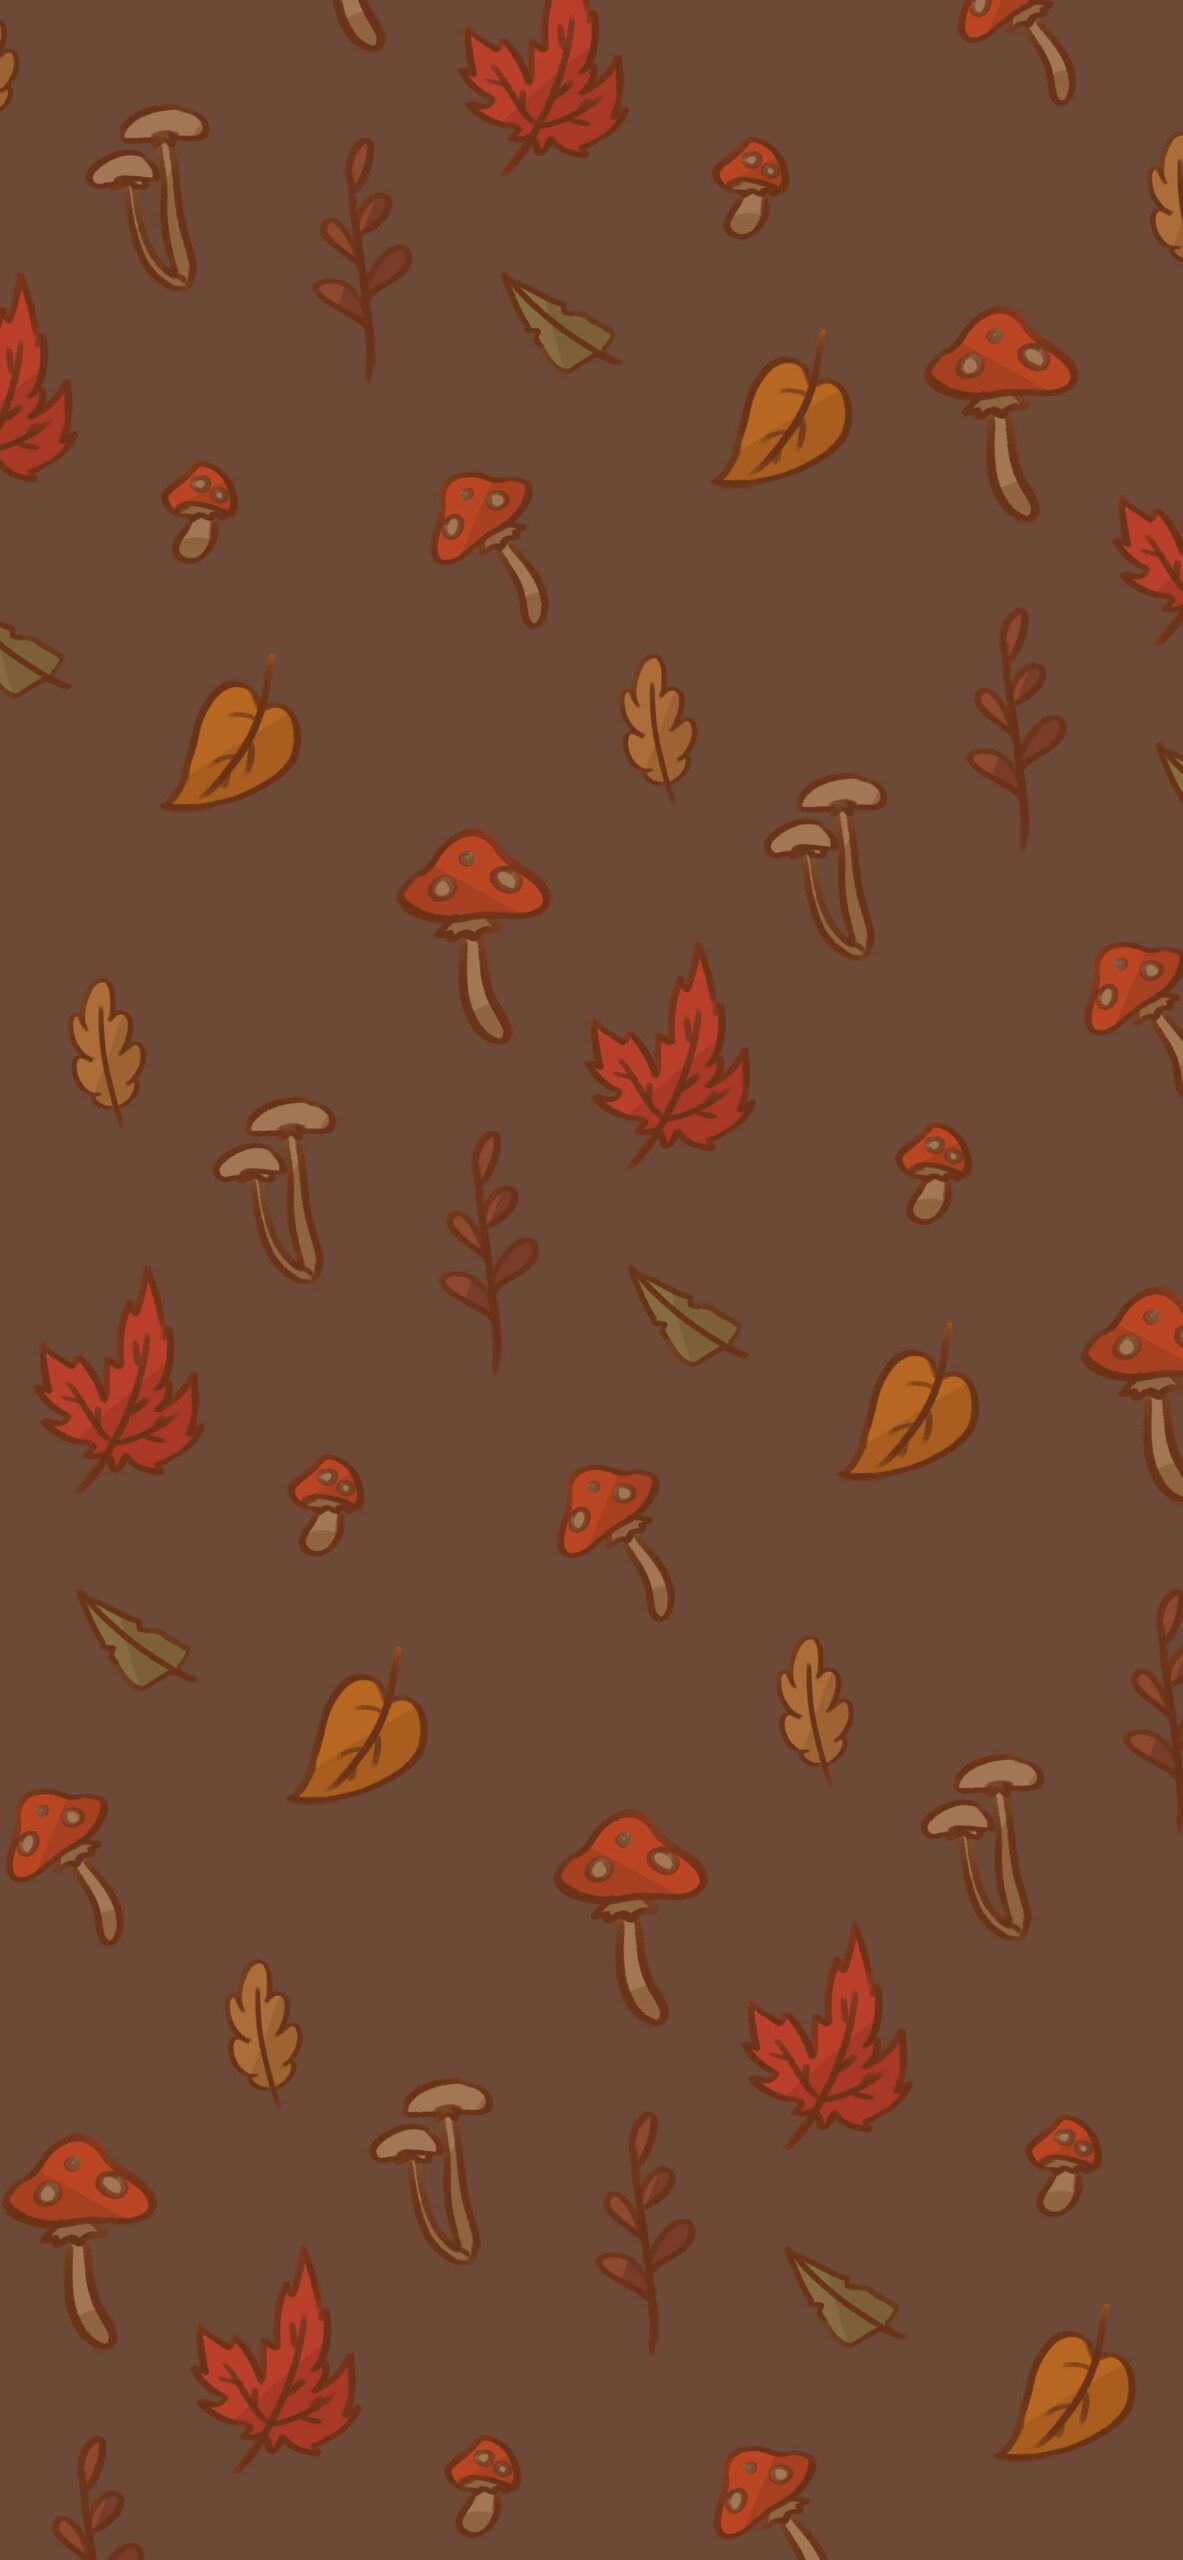 Tan Fall Aesthetic Wallpaper for iPhone Wallpaper For Phone